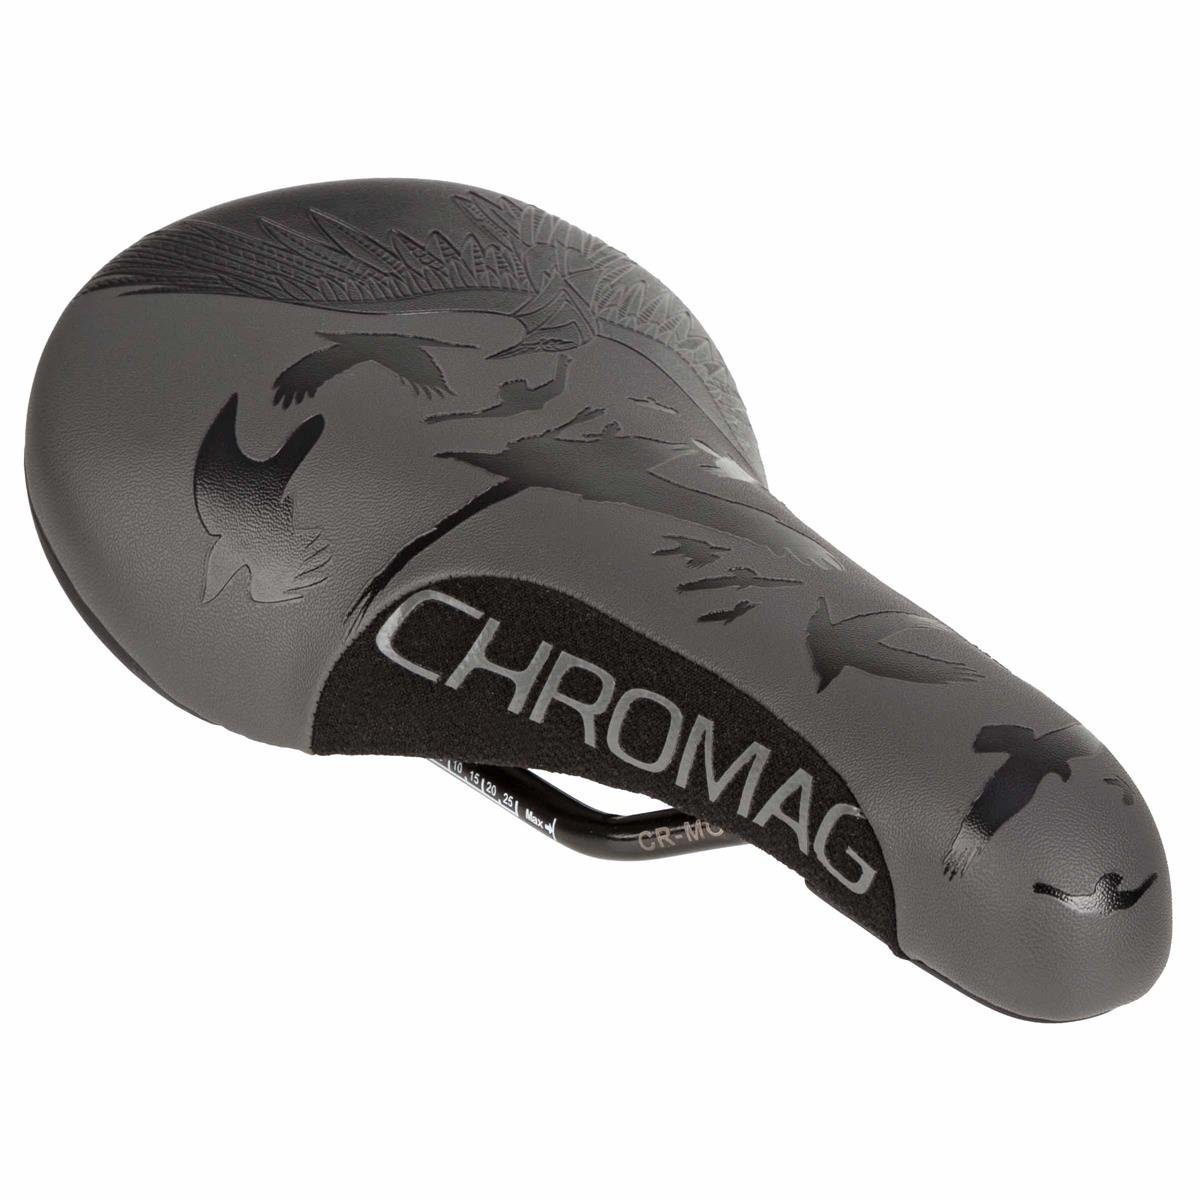 Chromag Saddle Overture LTD 243 x 136 mm, Grey/Black